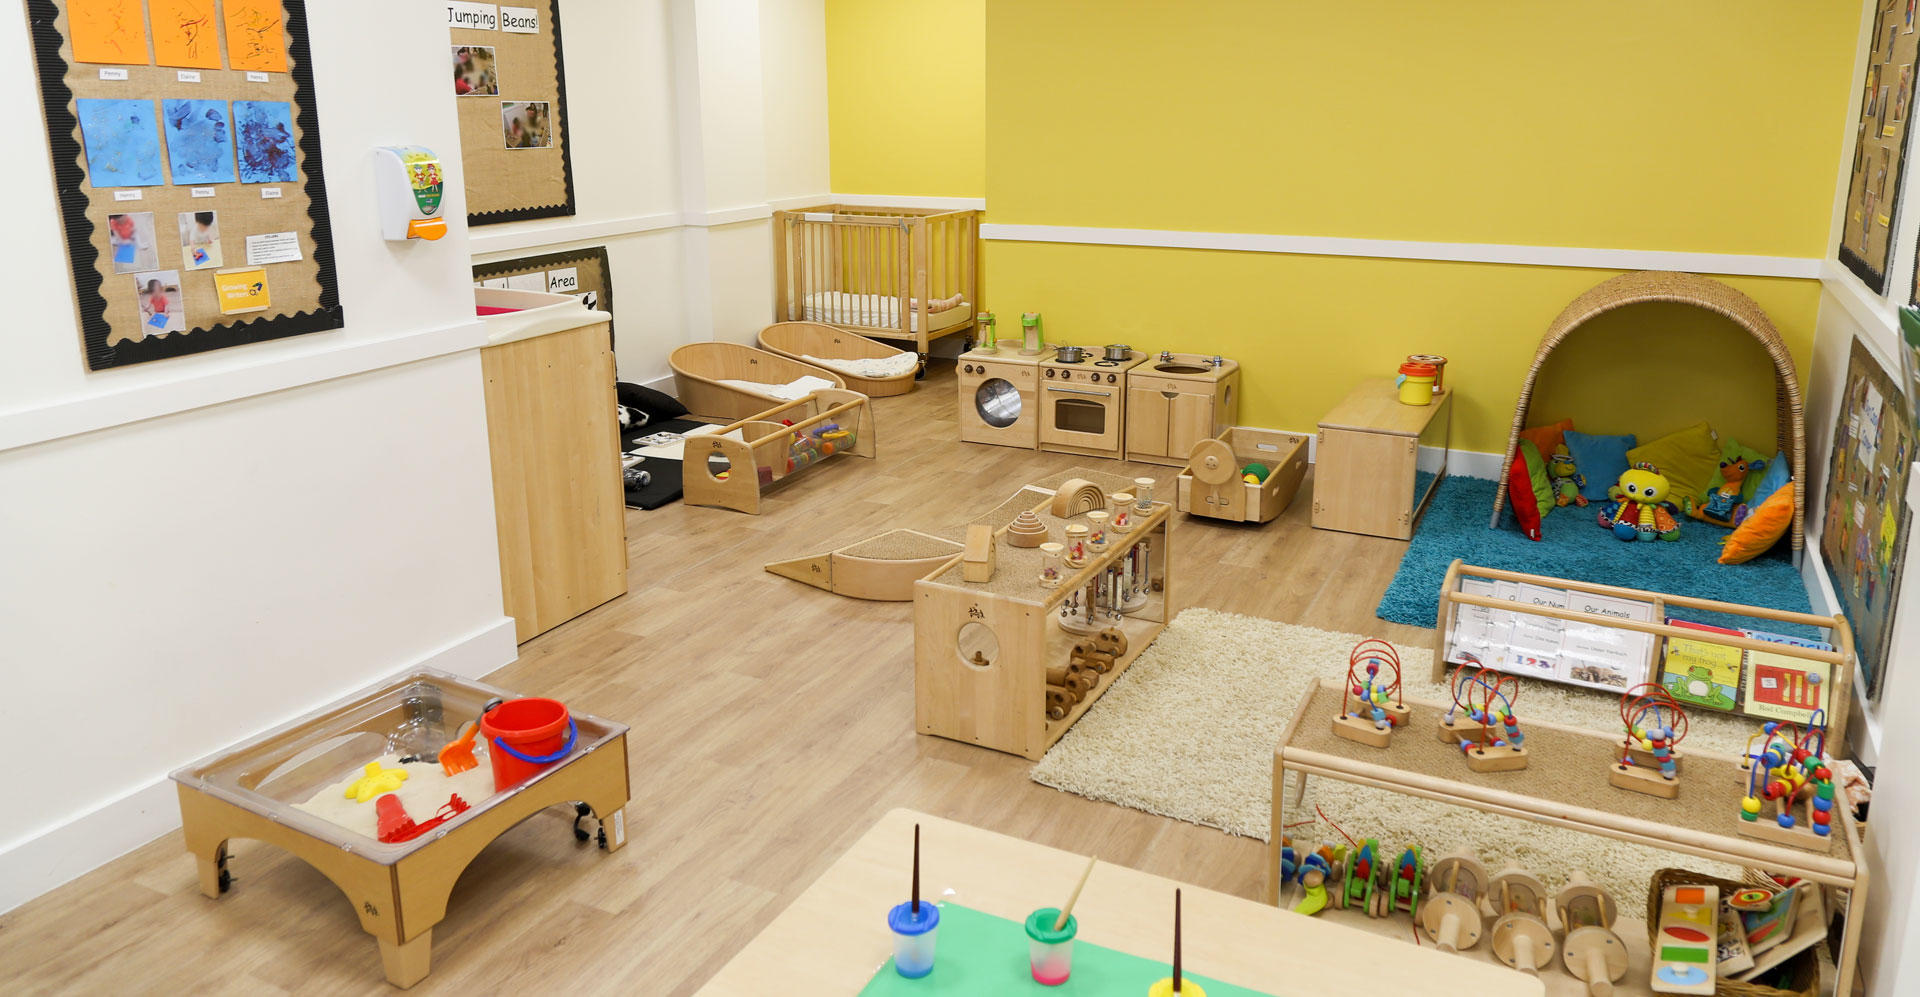 Bright Horizons Bank Street Day Nursery and Preschool London 03300 573573